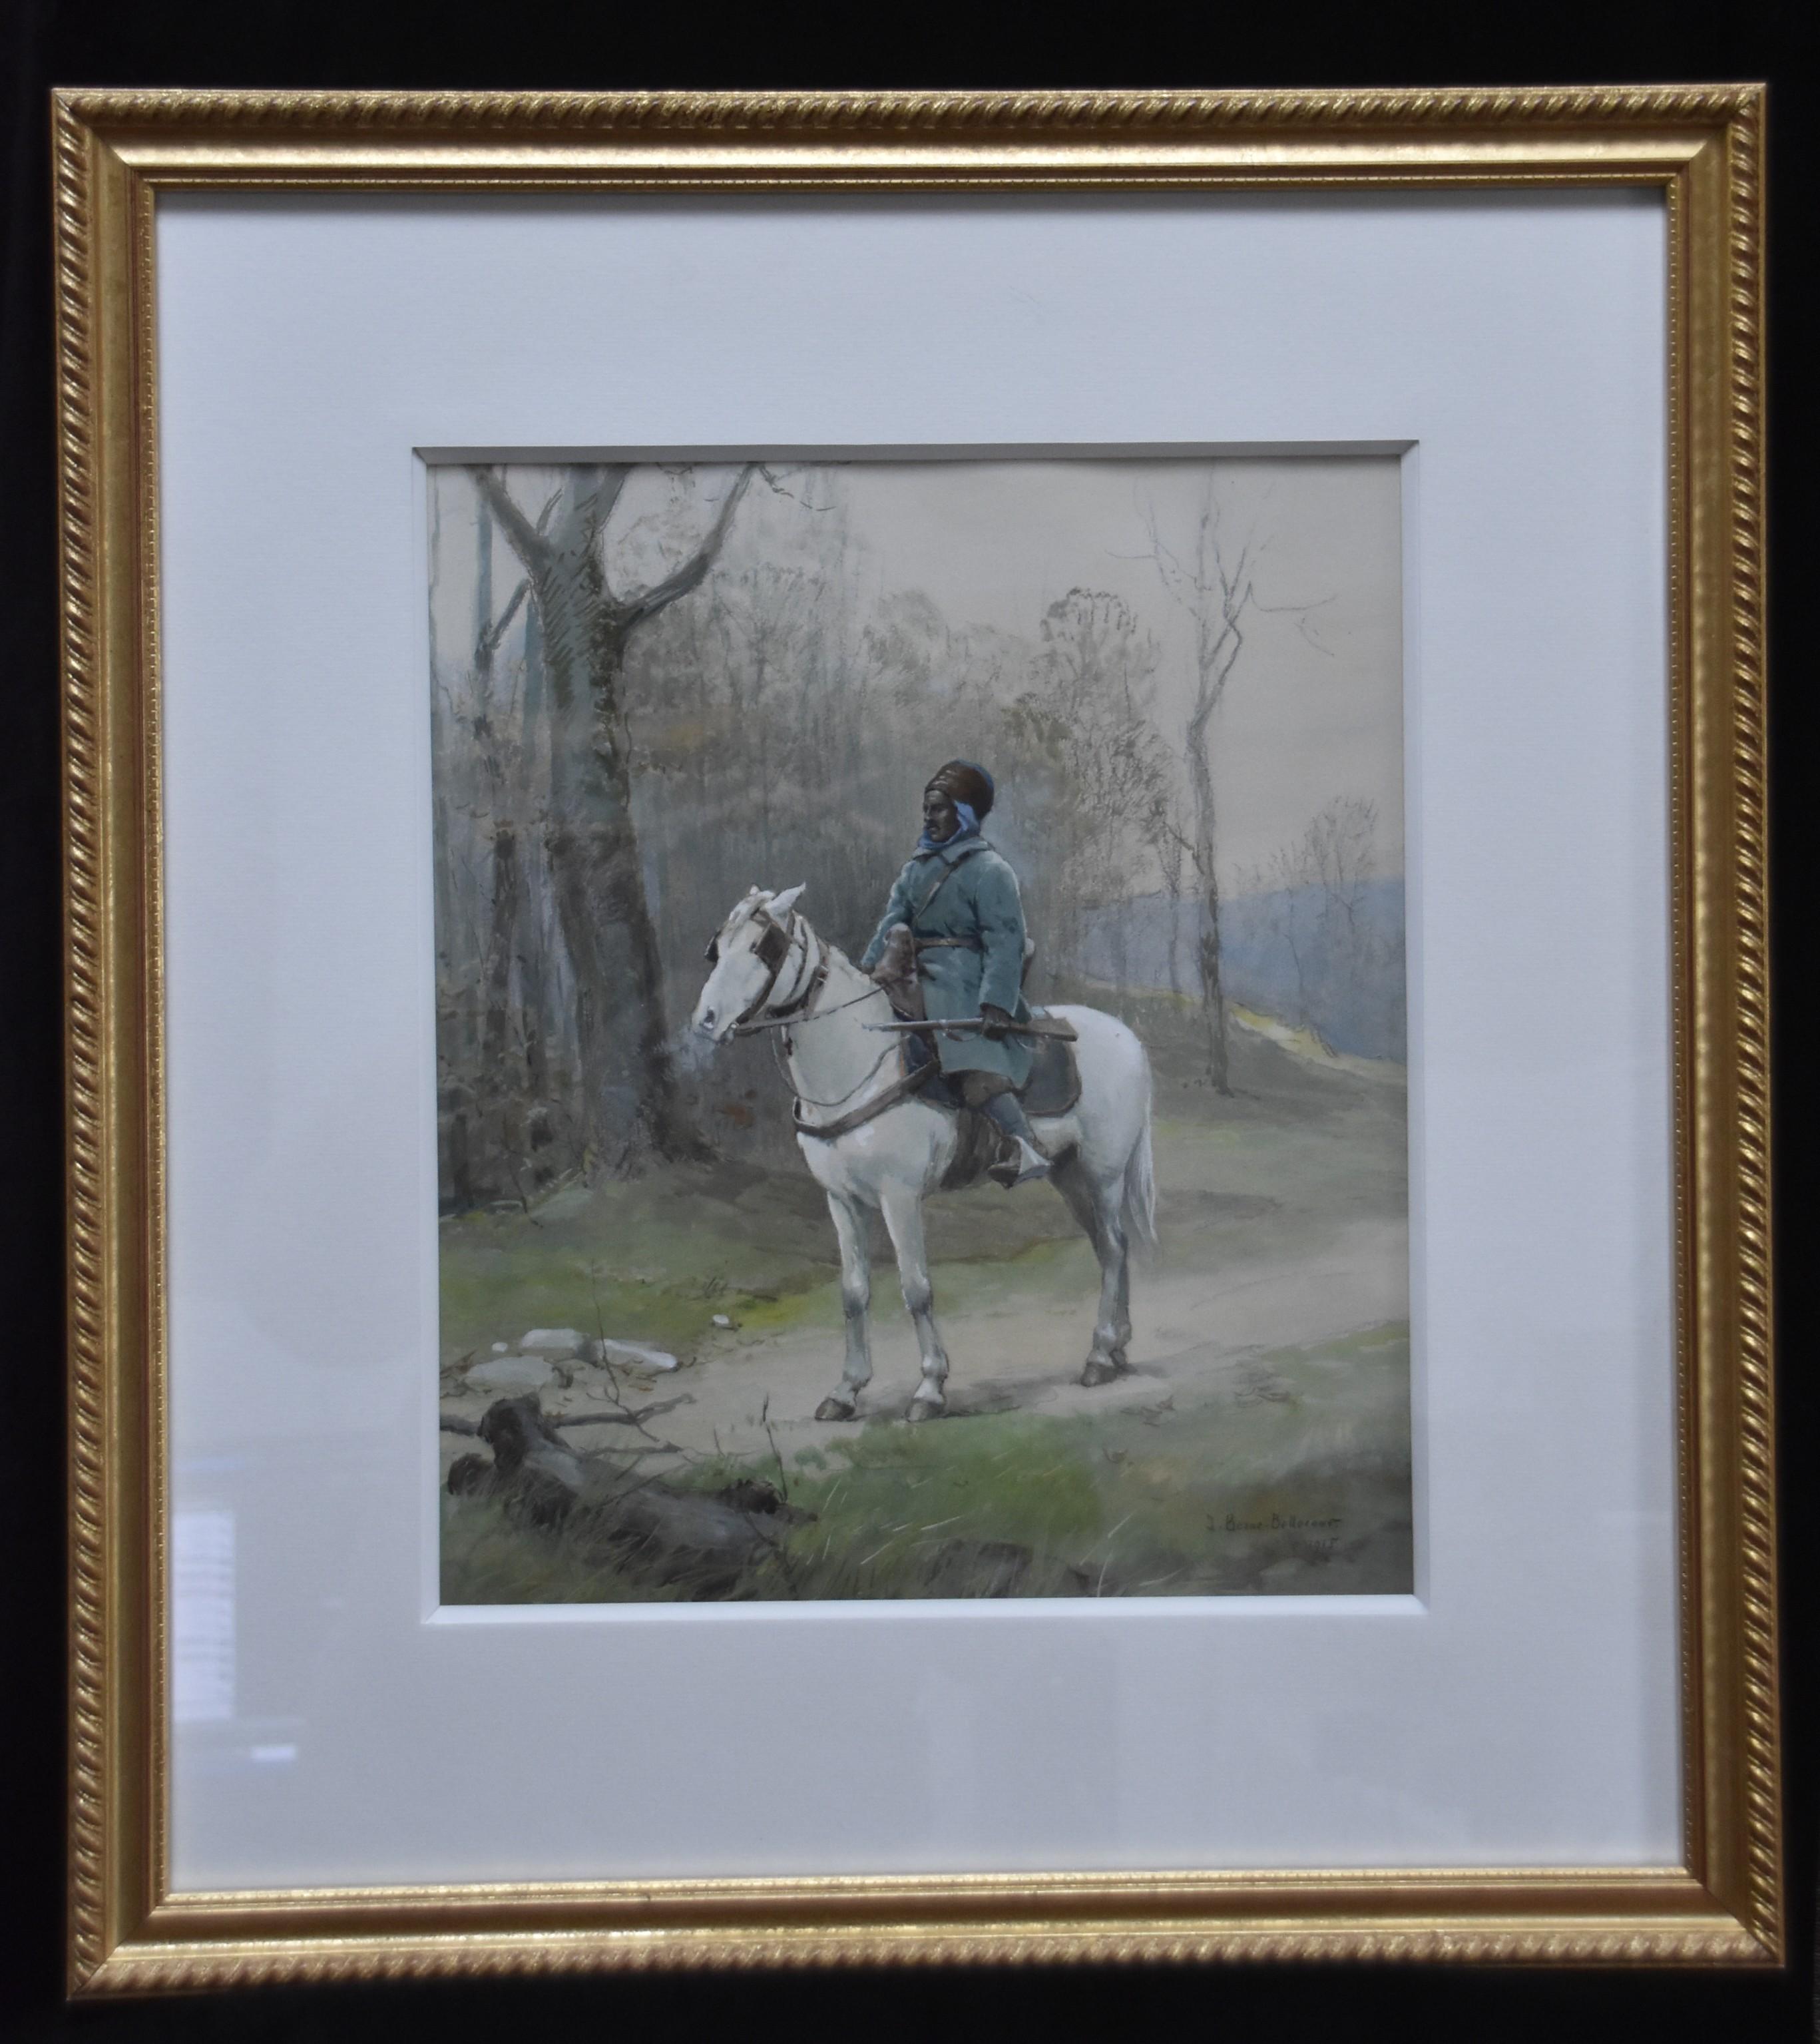 J.Jacques Berne-Bellecour (1874-1939), North African Horseman, 1915, watercolor - Art by Jean-Jacques Berne-Bellecour